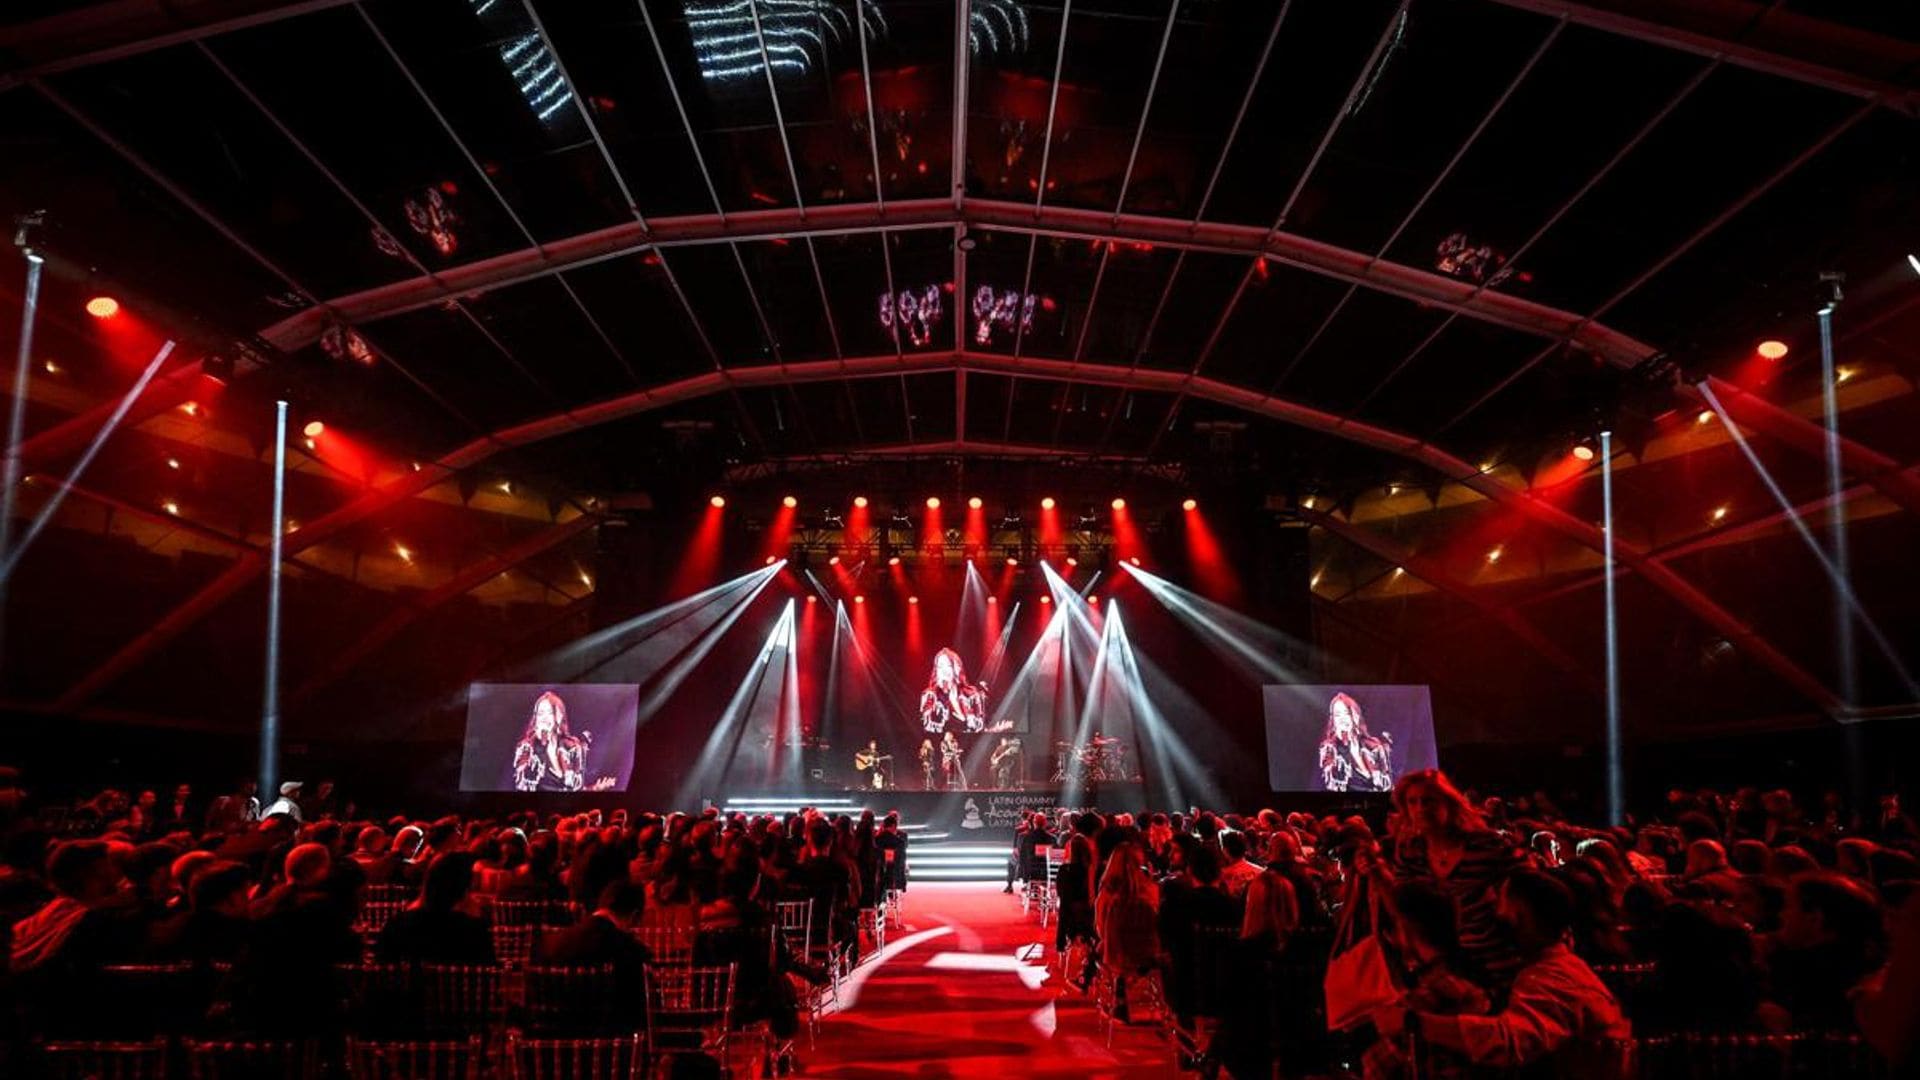 Find here who will host ‘Noche de Estrellas’ during the 2022 Latin Grammy